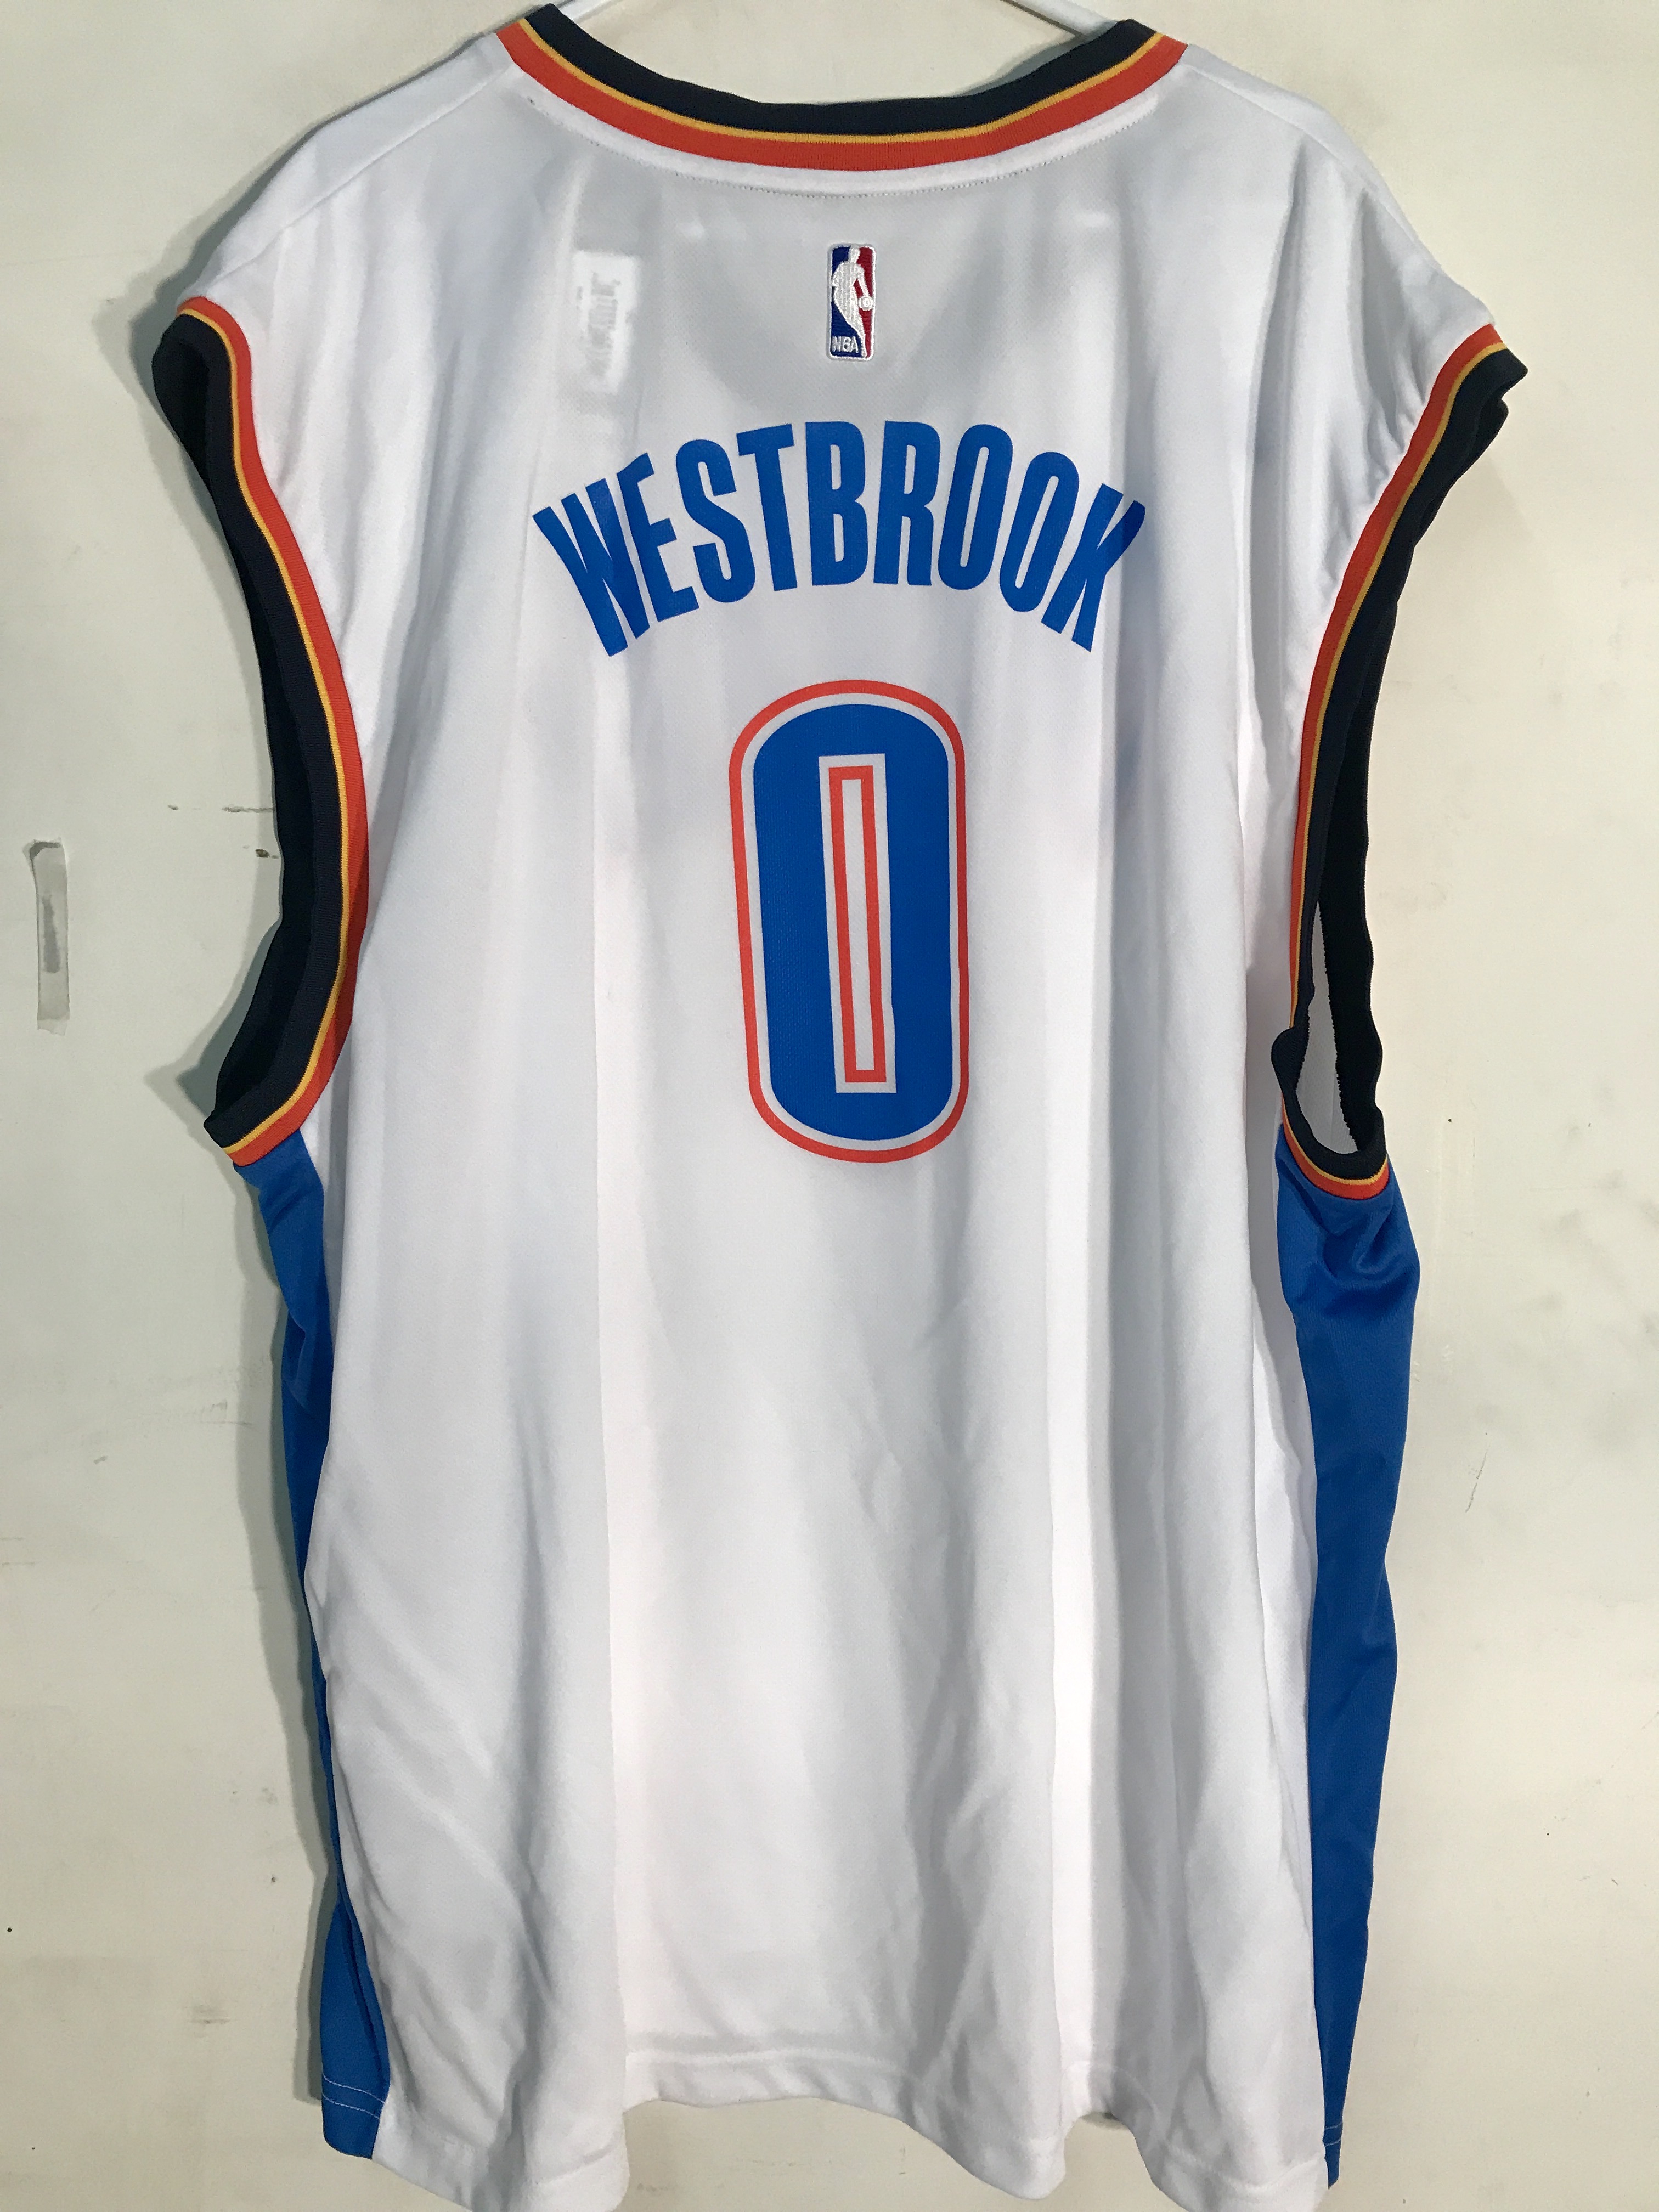 white westbrook jersey